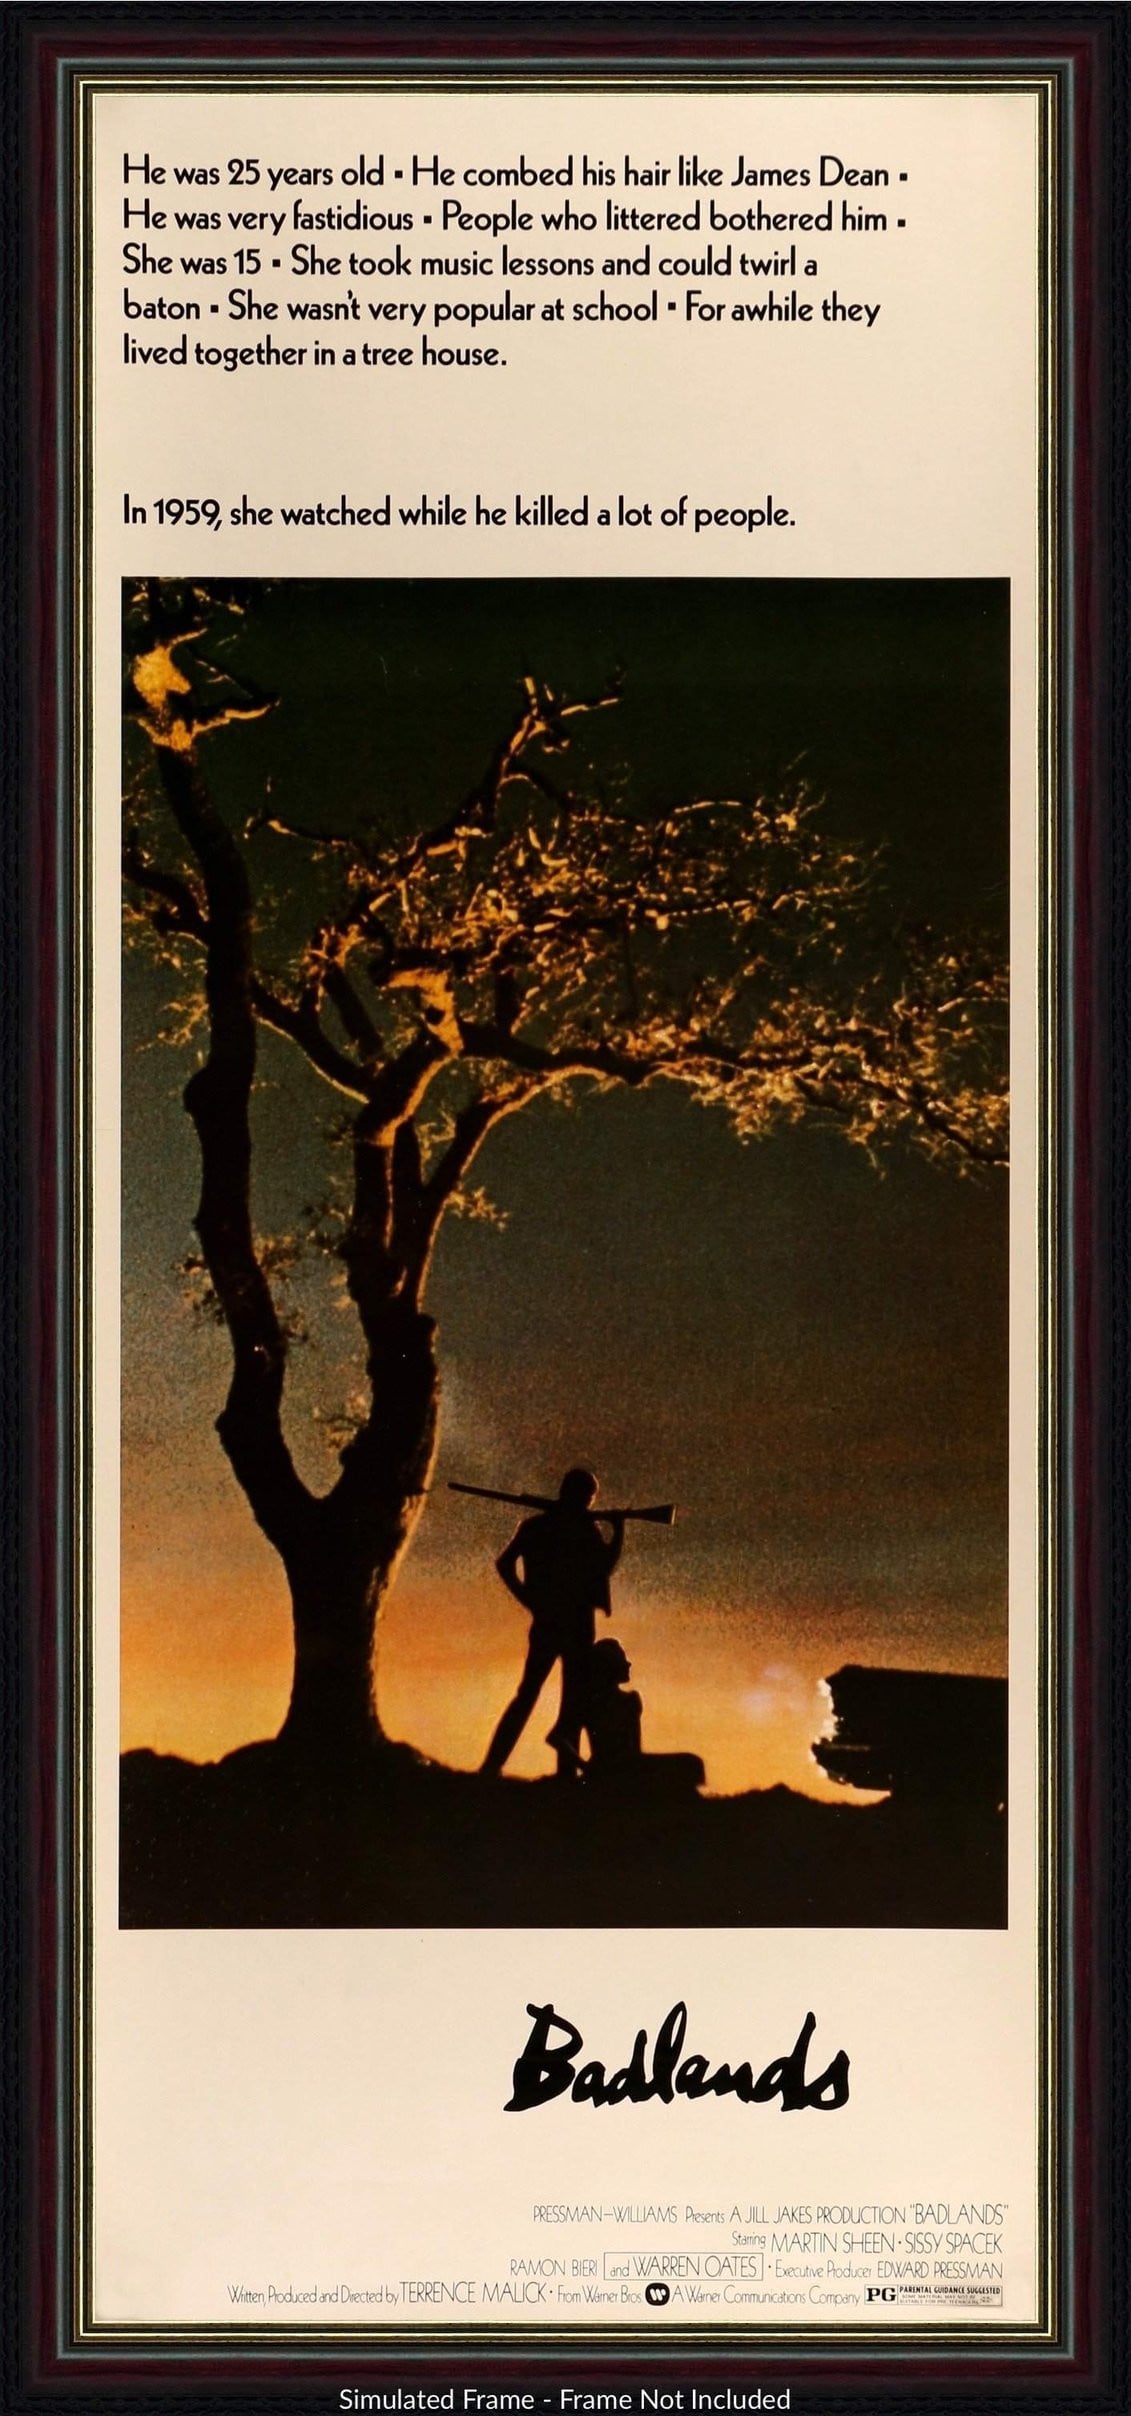 Badlands (1974) original movie poster for sale at Original Film Art